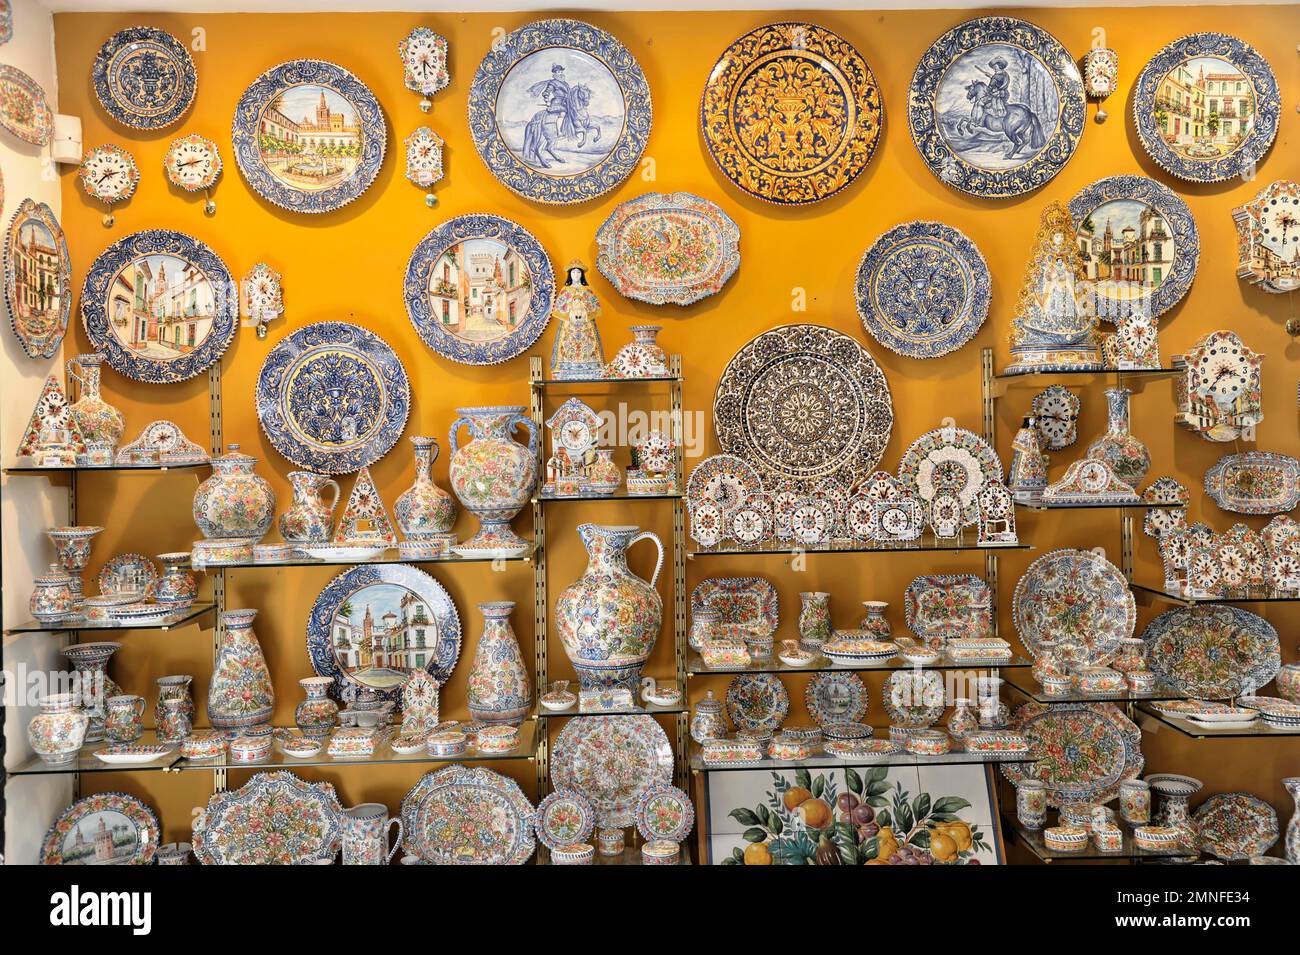 Keramik, Souvenirs, Verkaufsstand, Stadtzentrum, Sevilla, Andalusien, Spanien Stockfoto